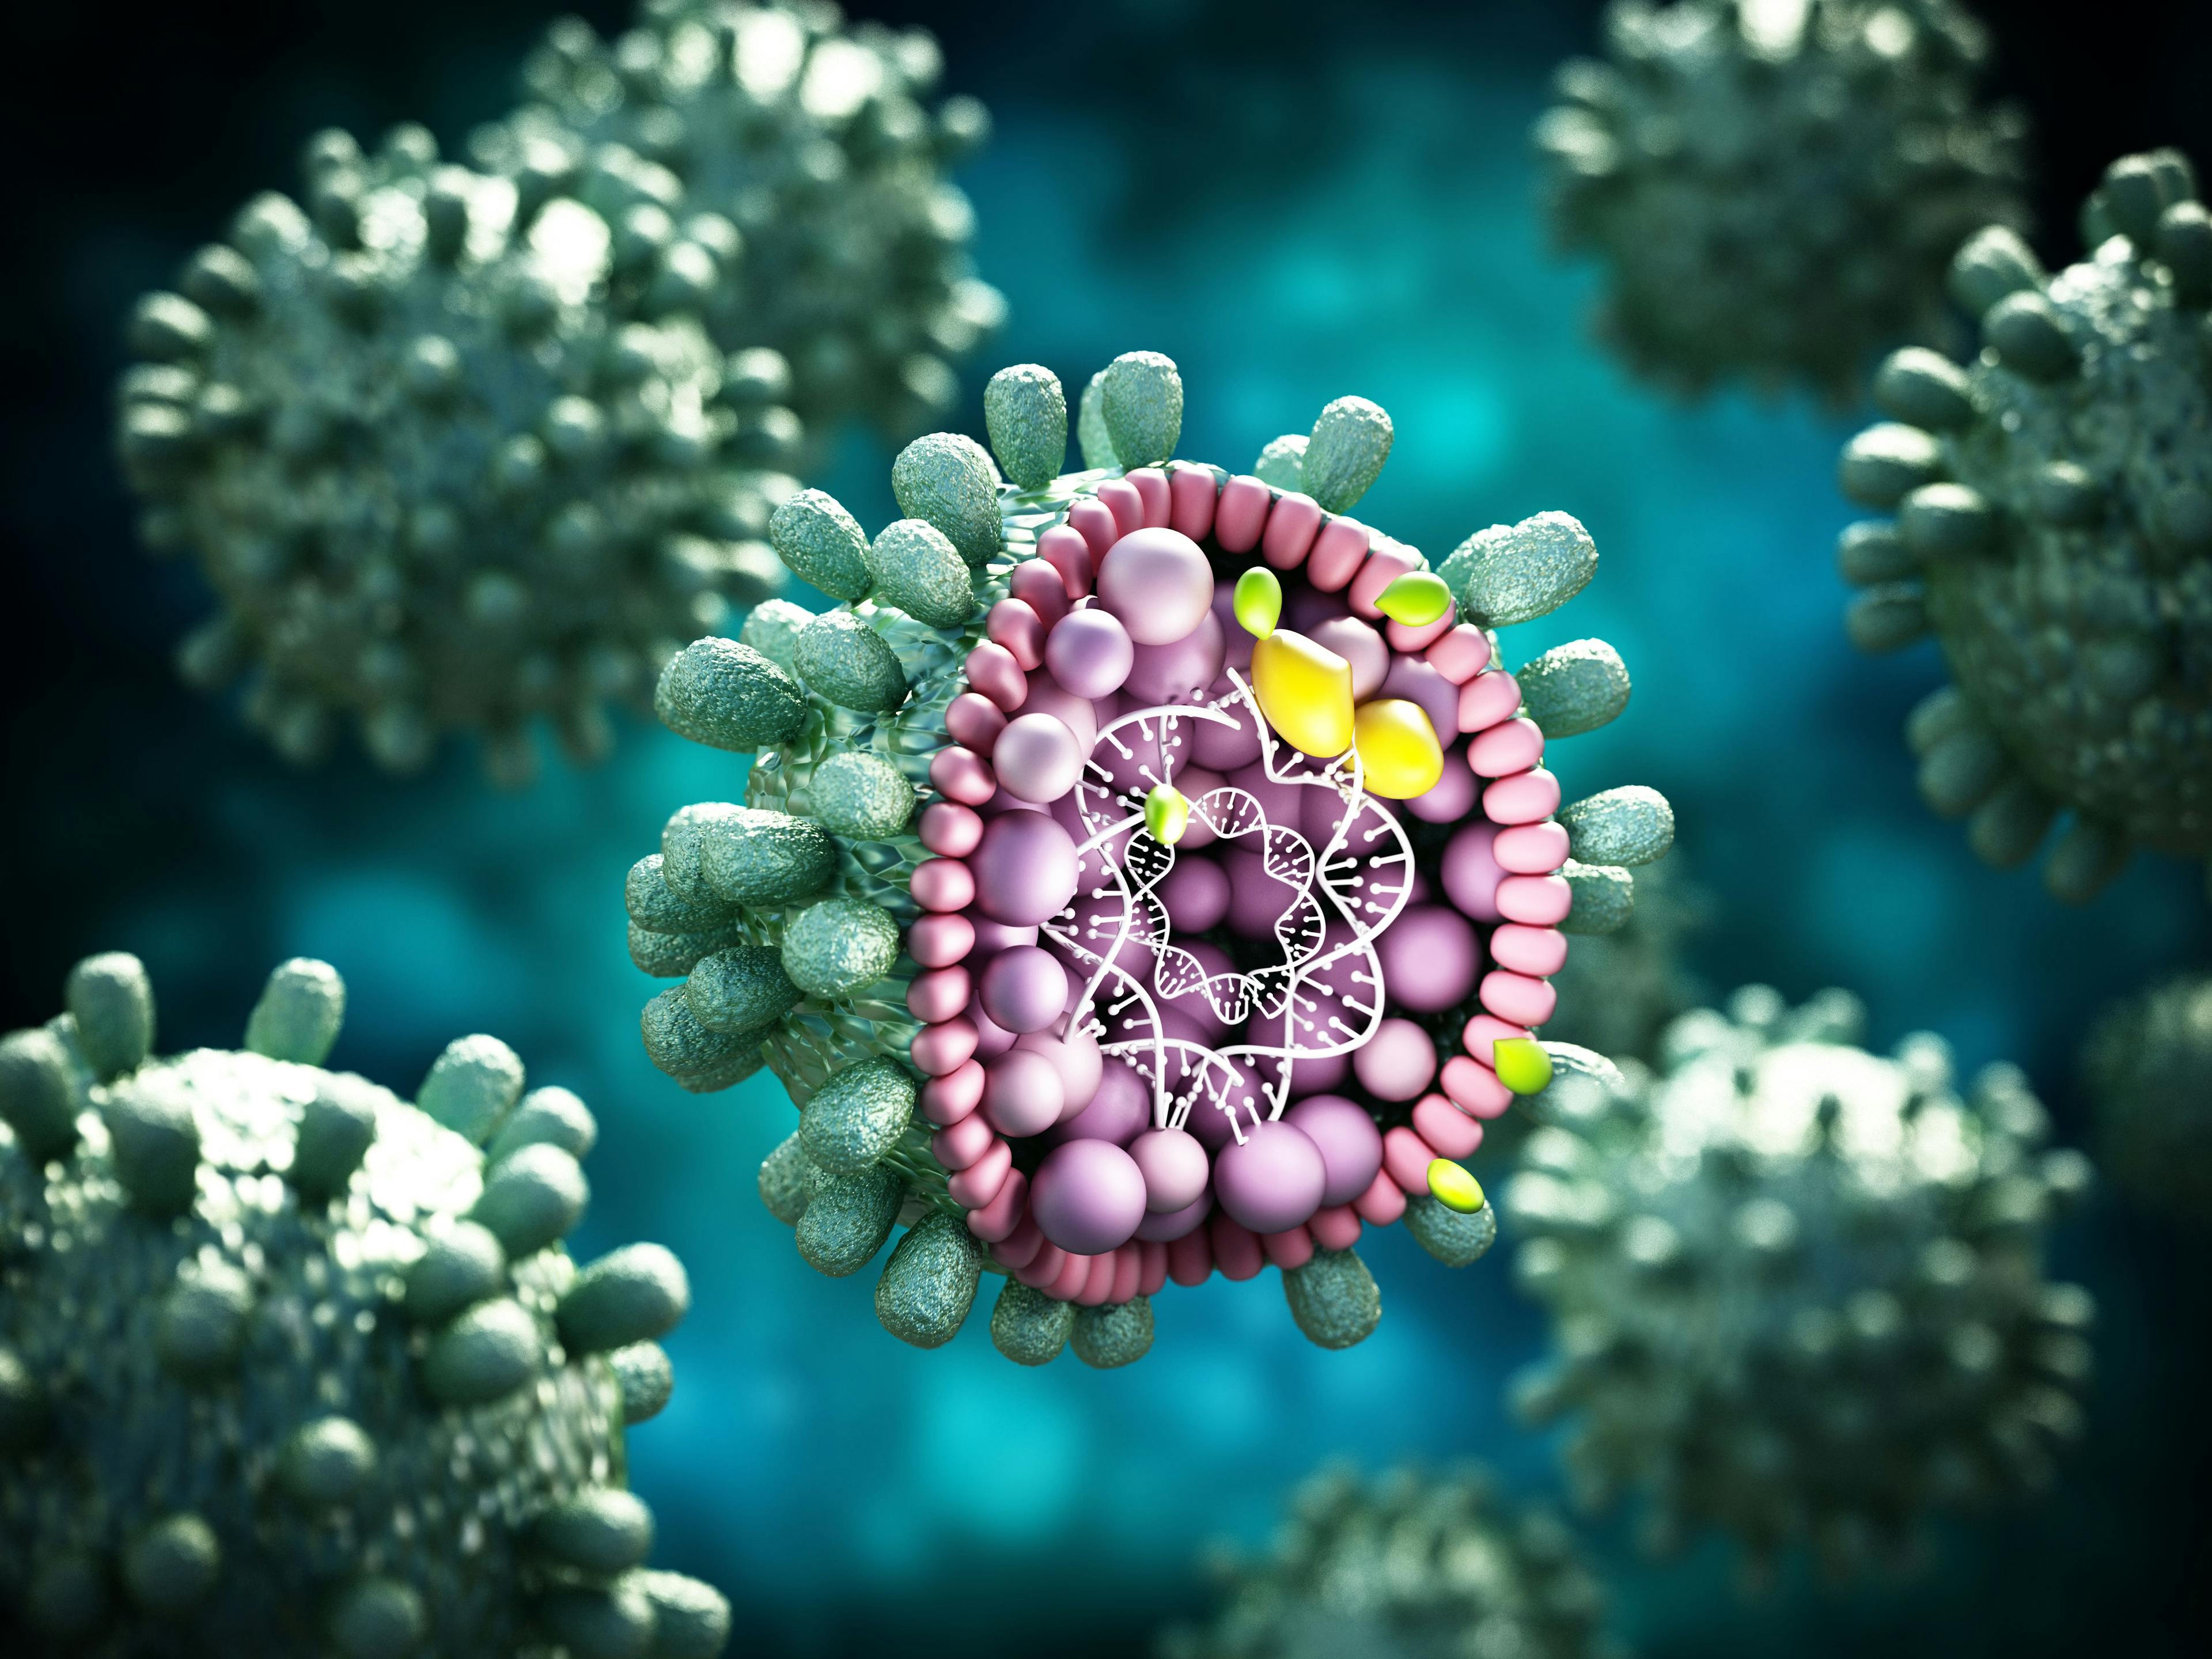 New Investigational Therapies for Hepatitis B Virus